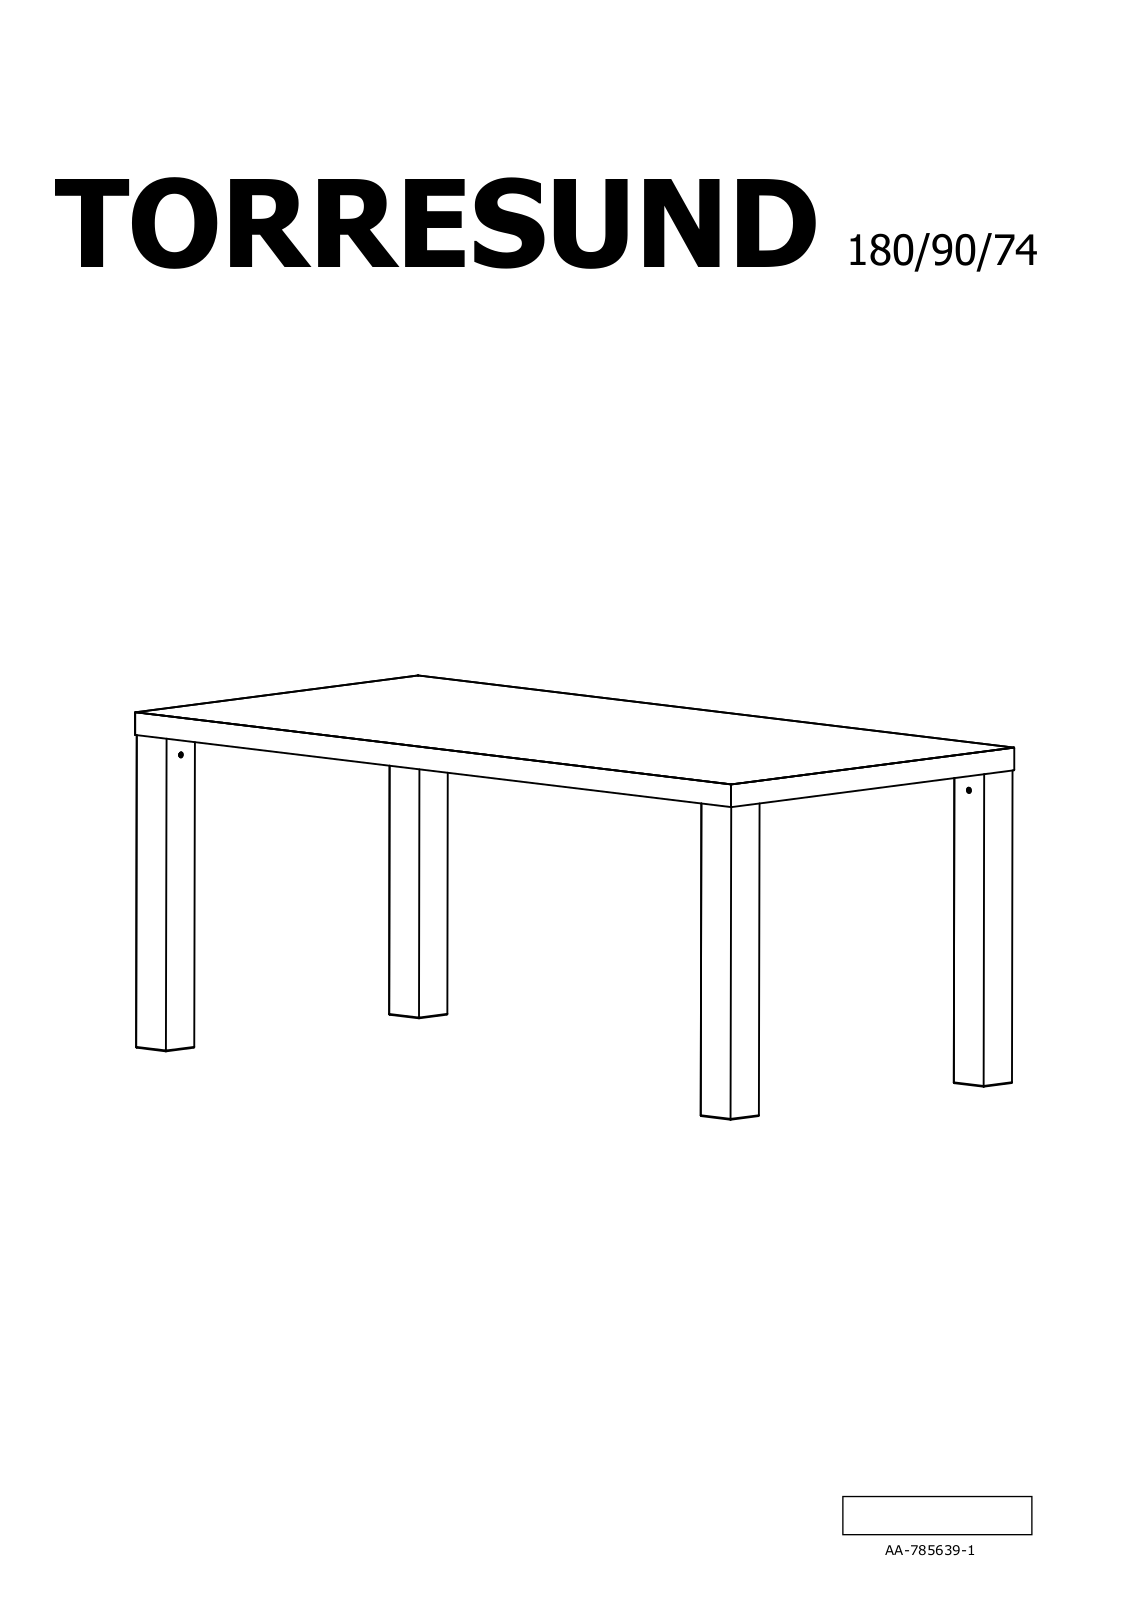 IKEA TORESUND User Manual